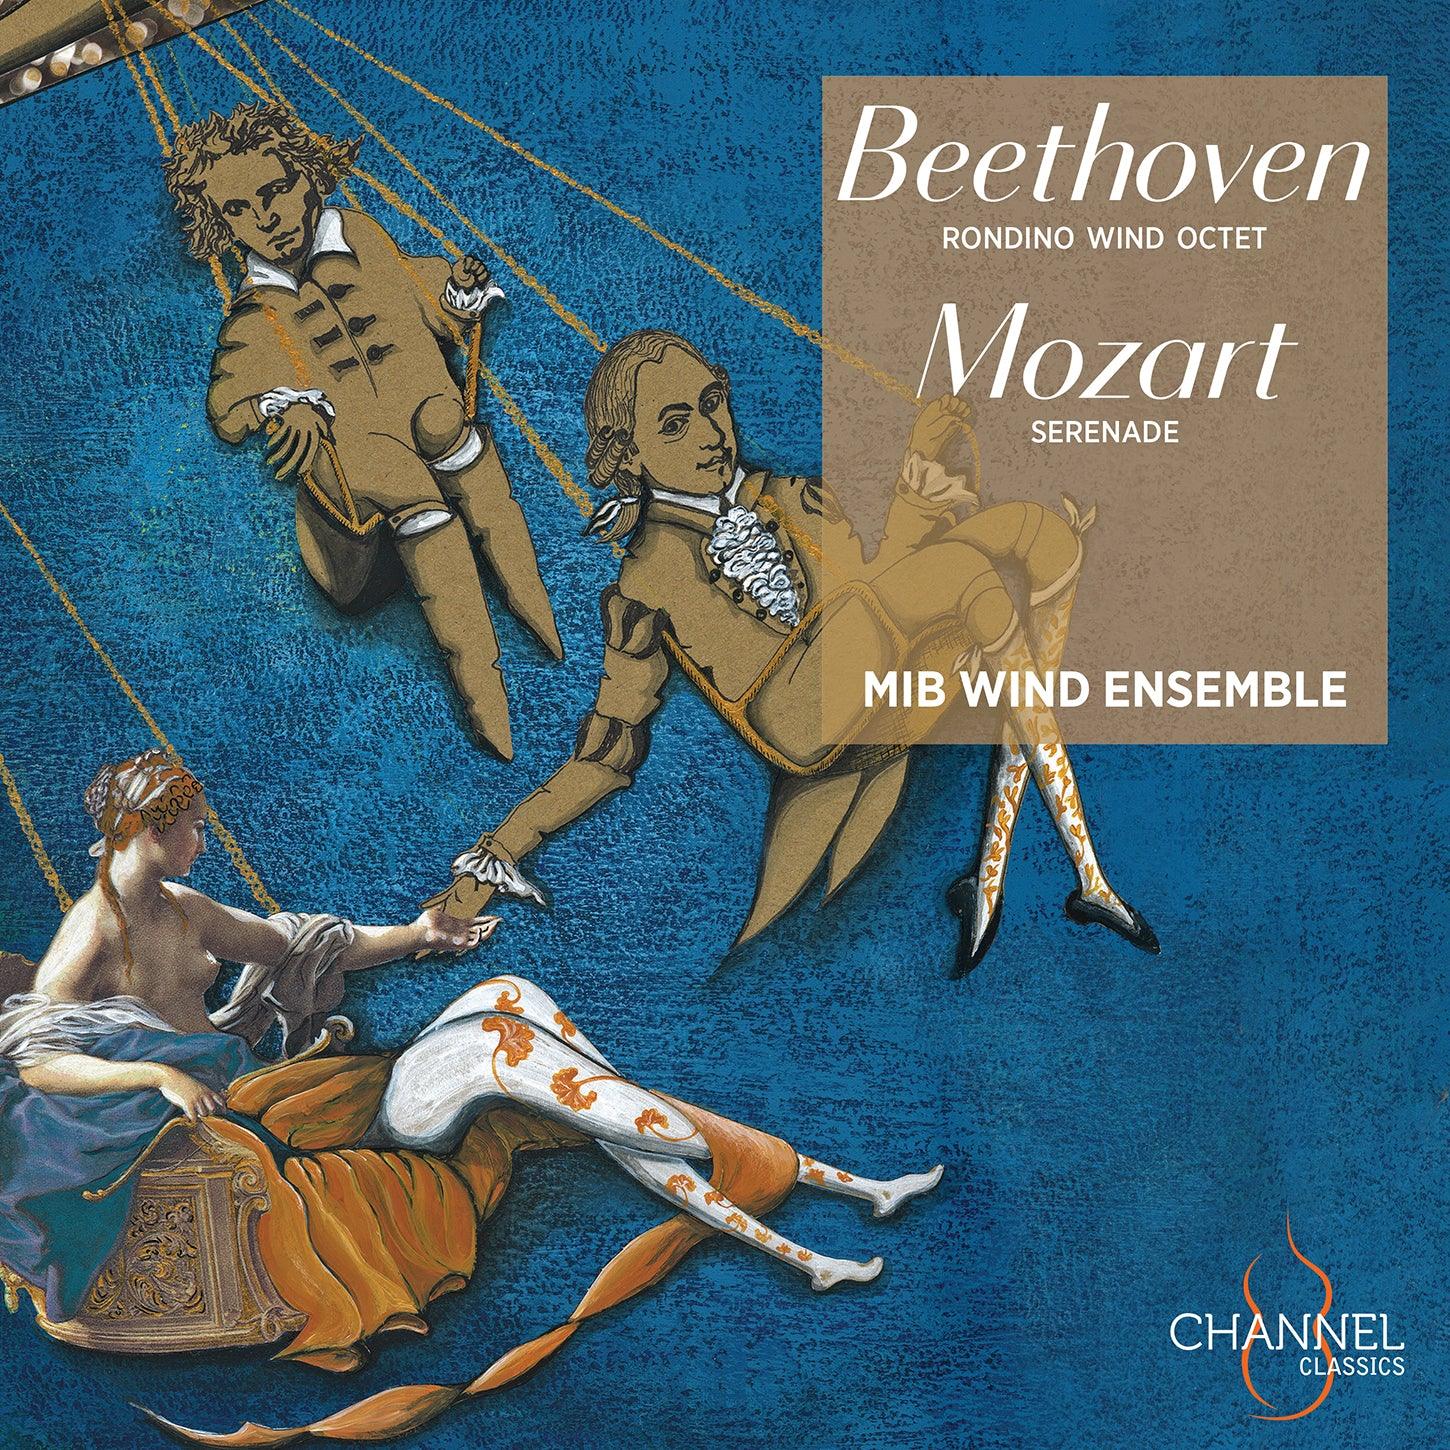 Beethoven, Mozart: Works for Winds / MIB Wind Ensemble - ArkivMusic